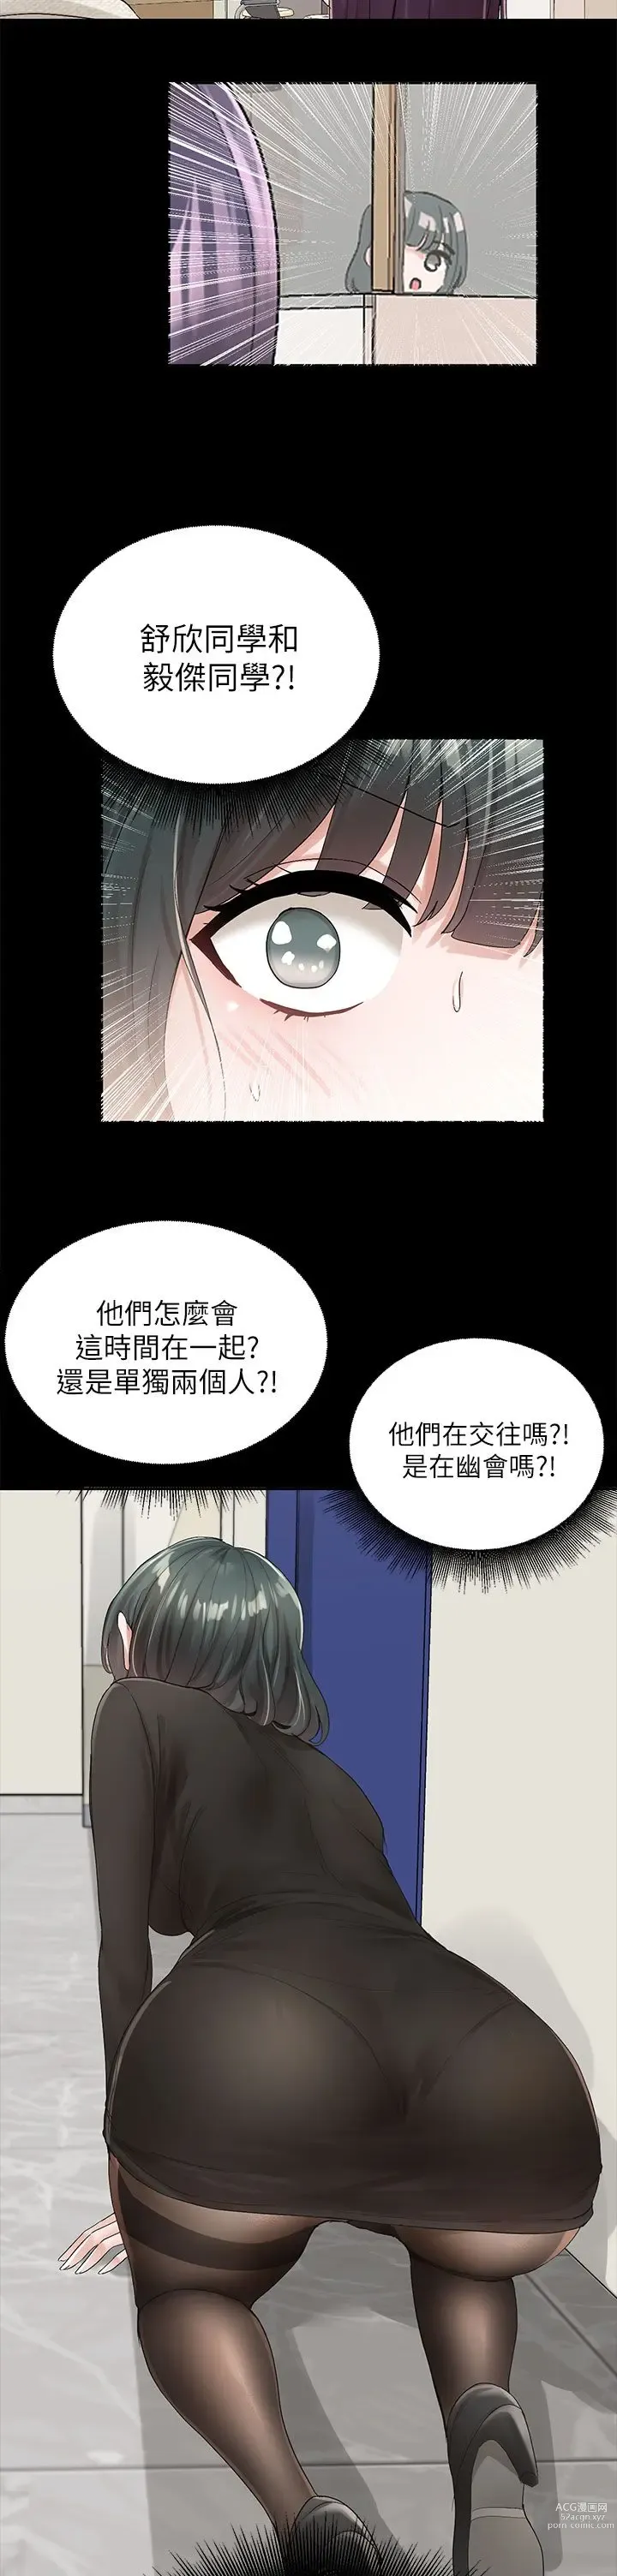 Page 1914 of manga 社团学姐/Circles 51-100